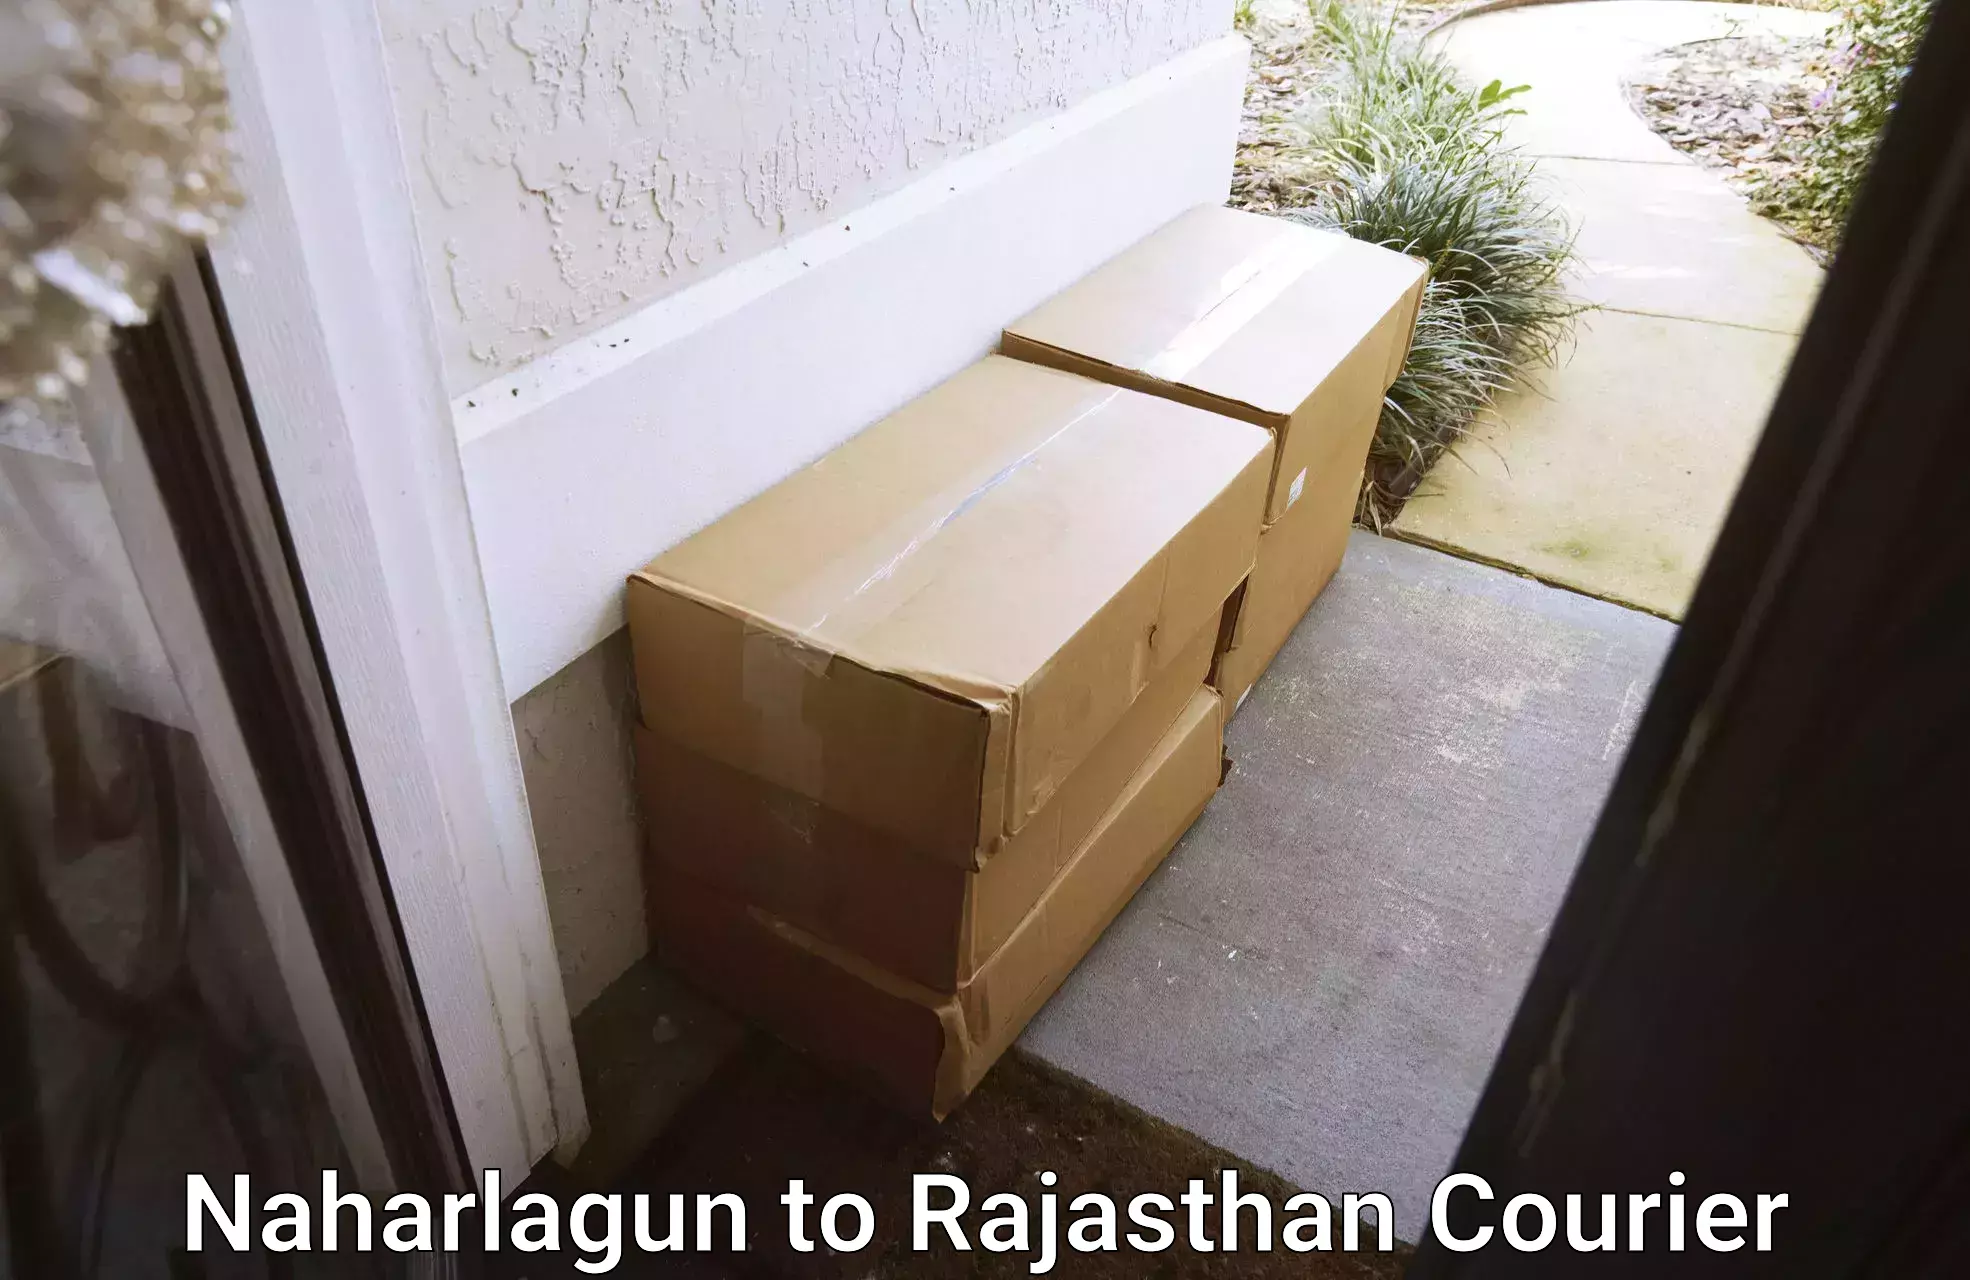 Digital courier platforms Naharlagun to Nagaur